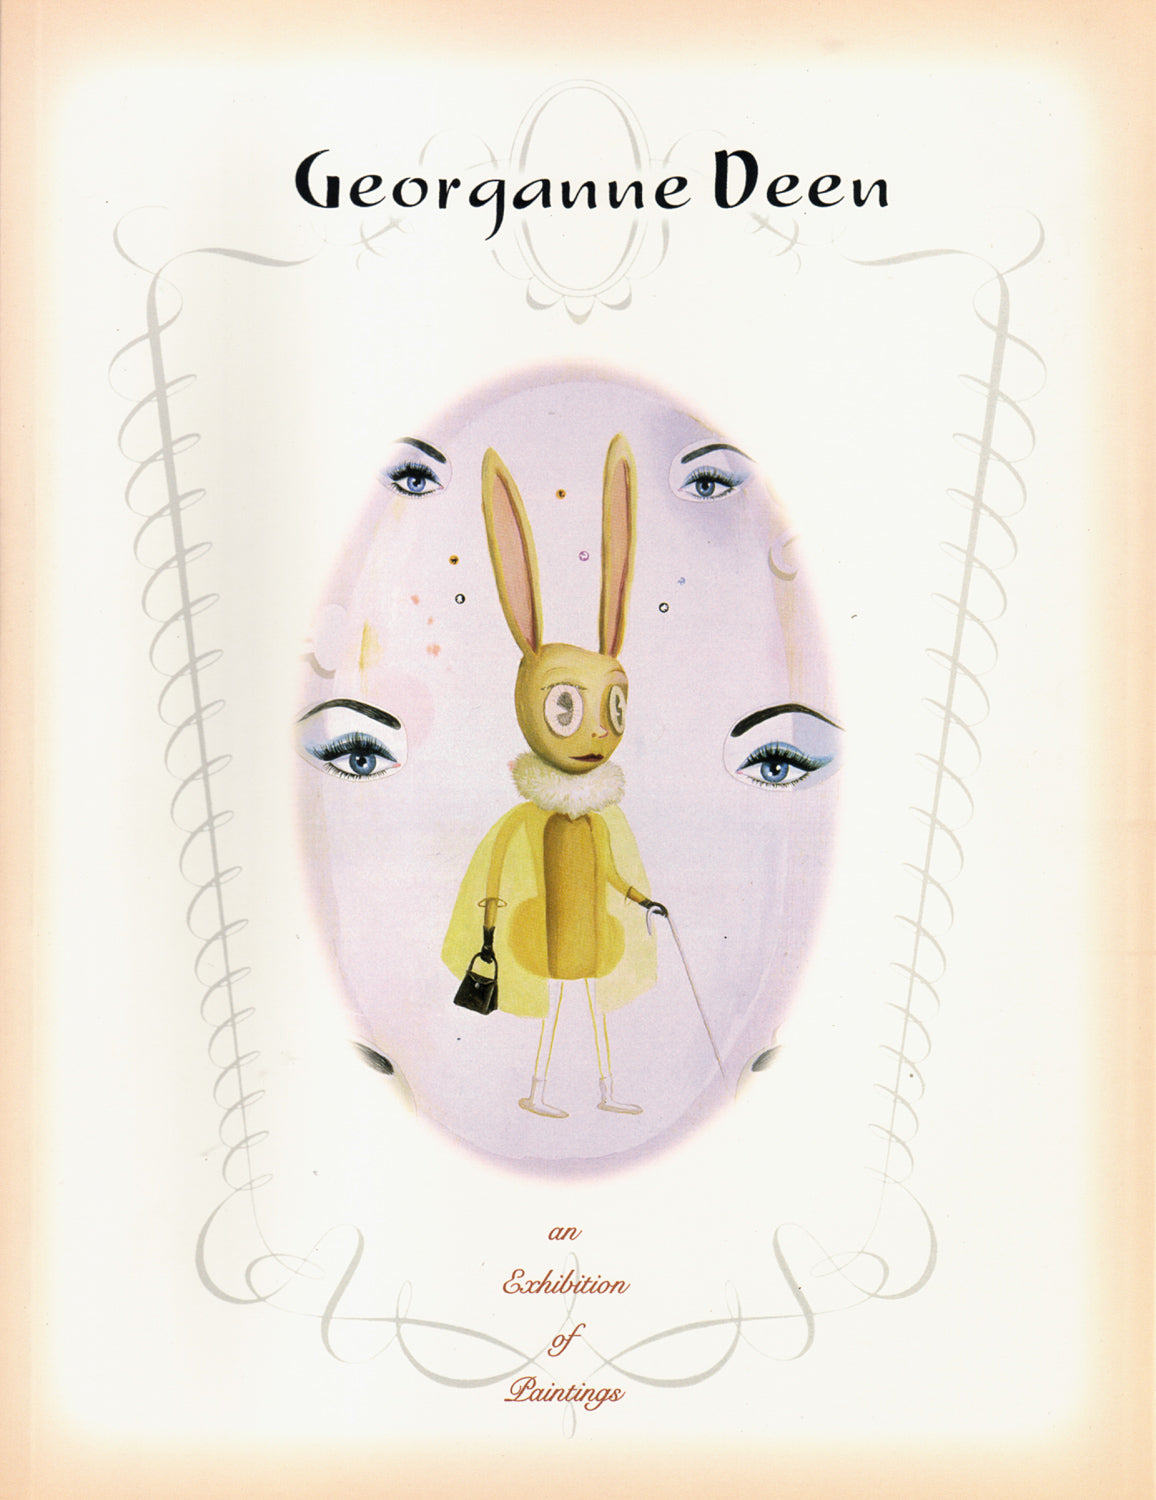 Georganne Deen [Exhibition Catalogue]